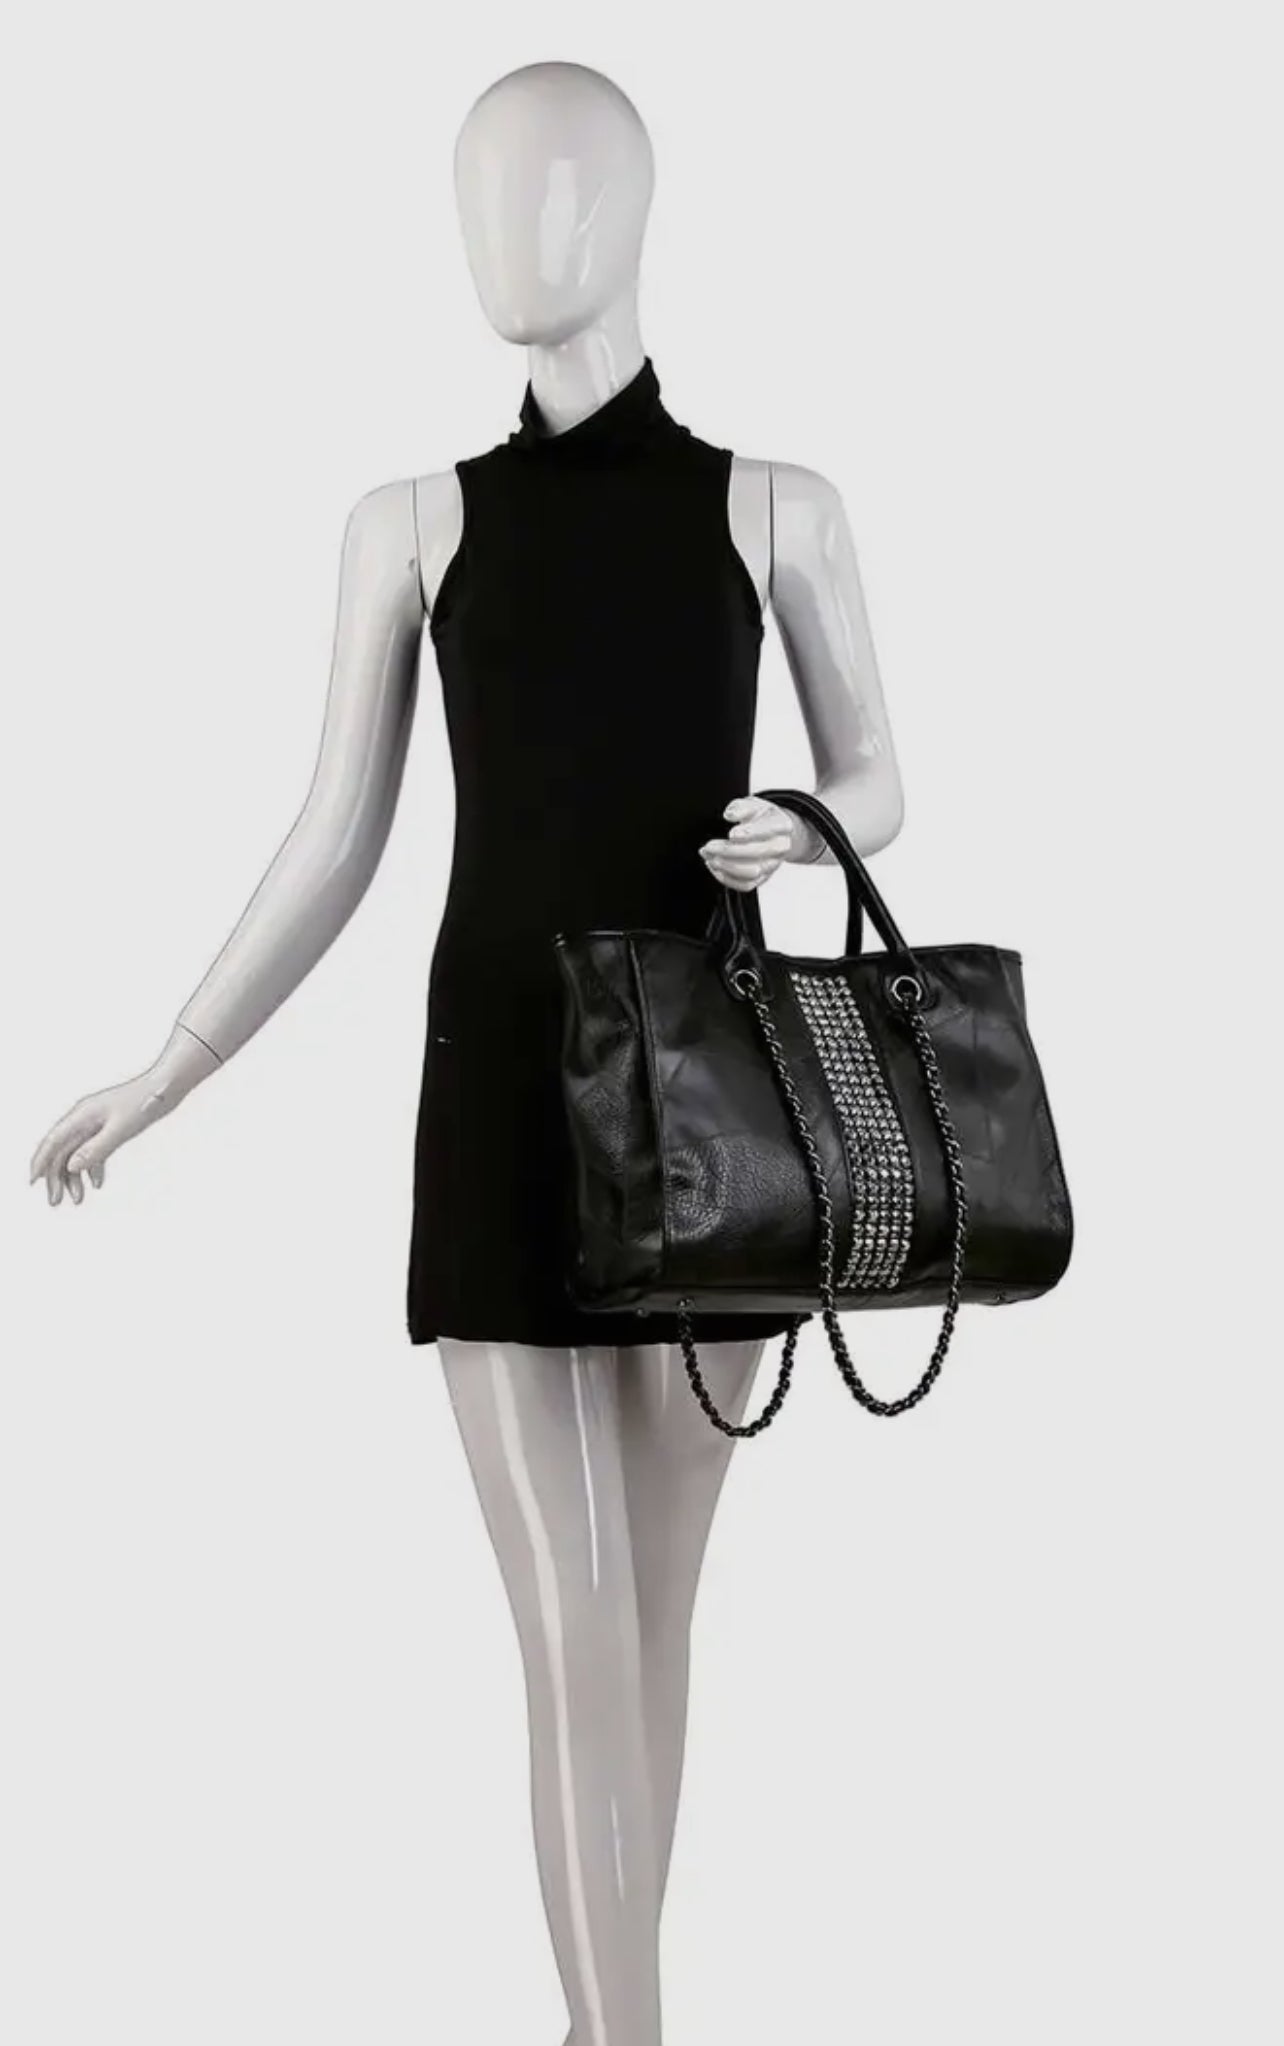 Stunning Rhinestone Accented Tote Handbag
Make a shining